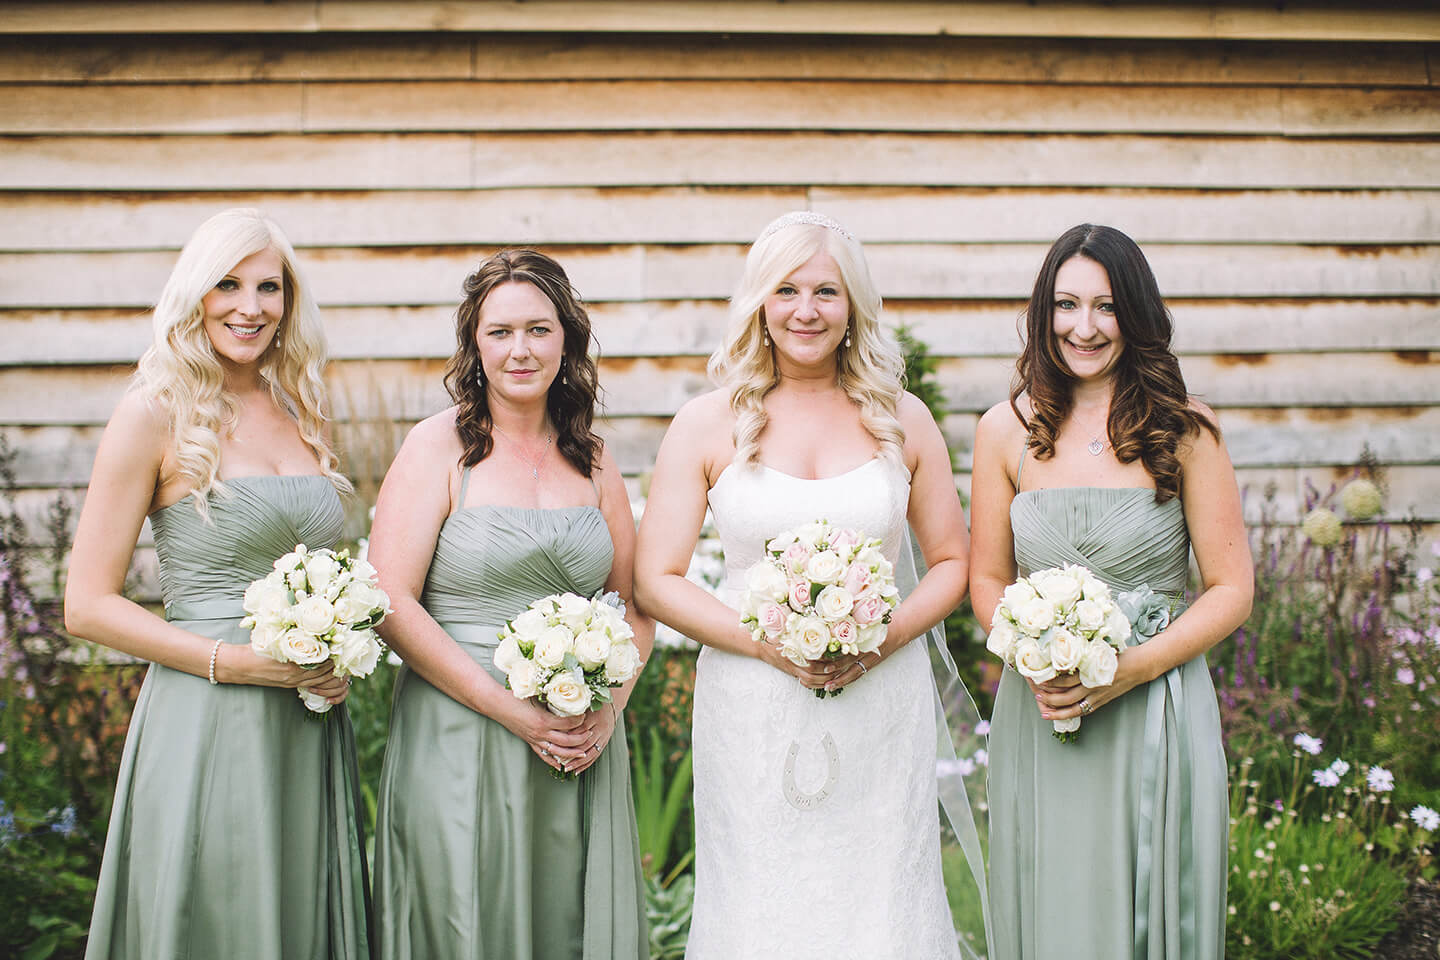 The three bridesmaids wore sage green bridesmaid dresses